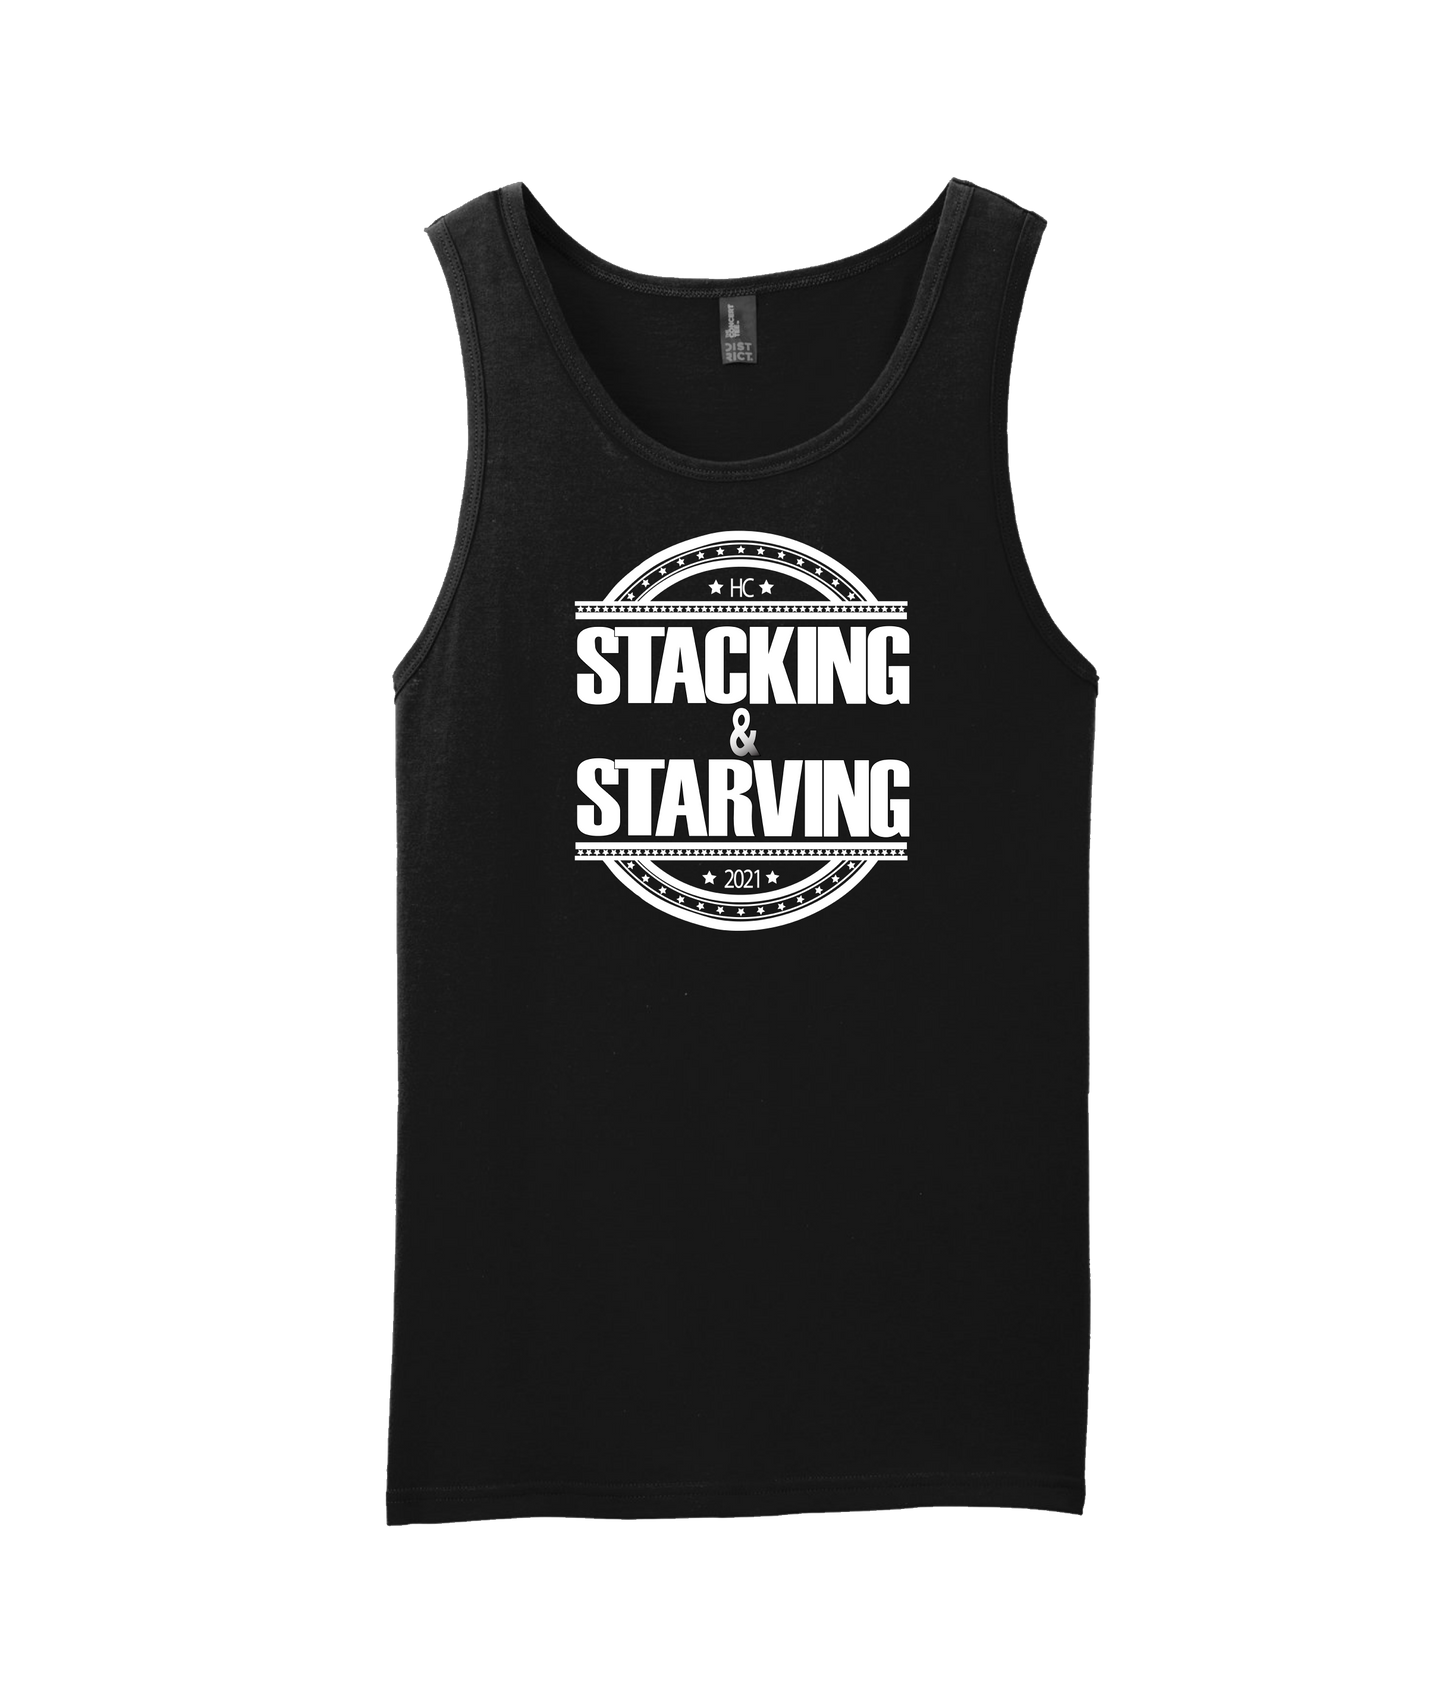 A1 Yolaman - Stacking & Starving - Black Tank Top